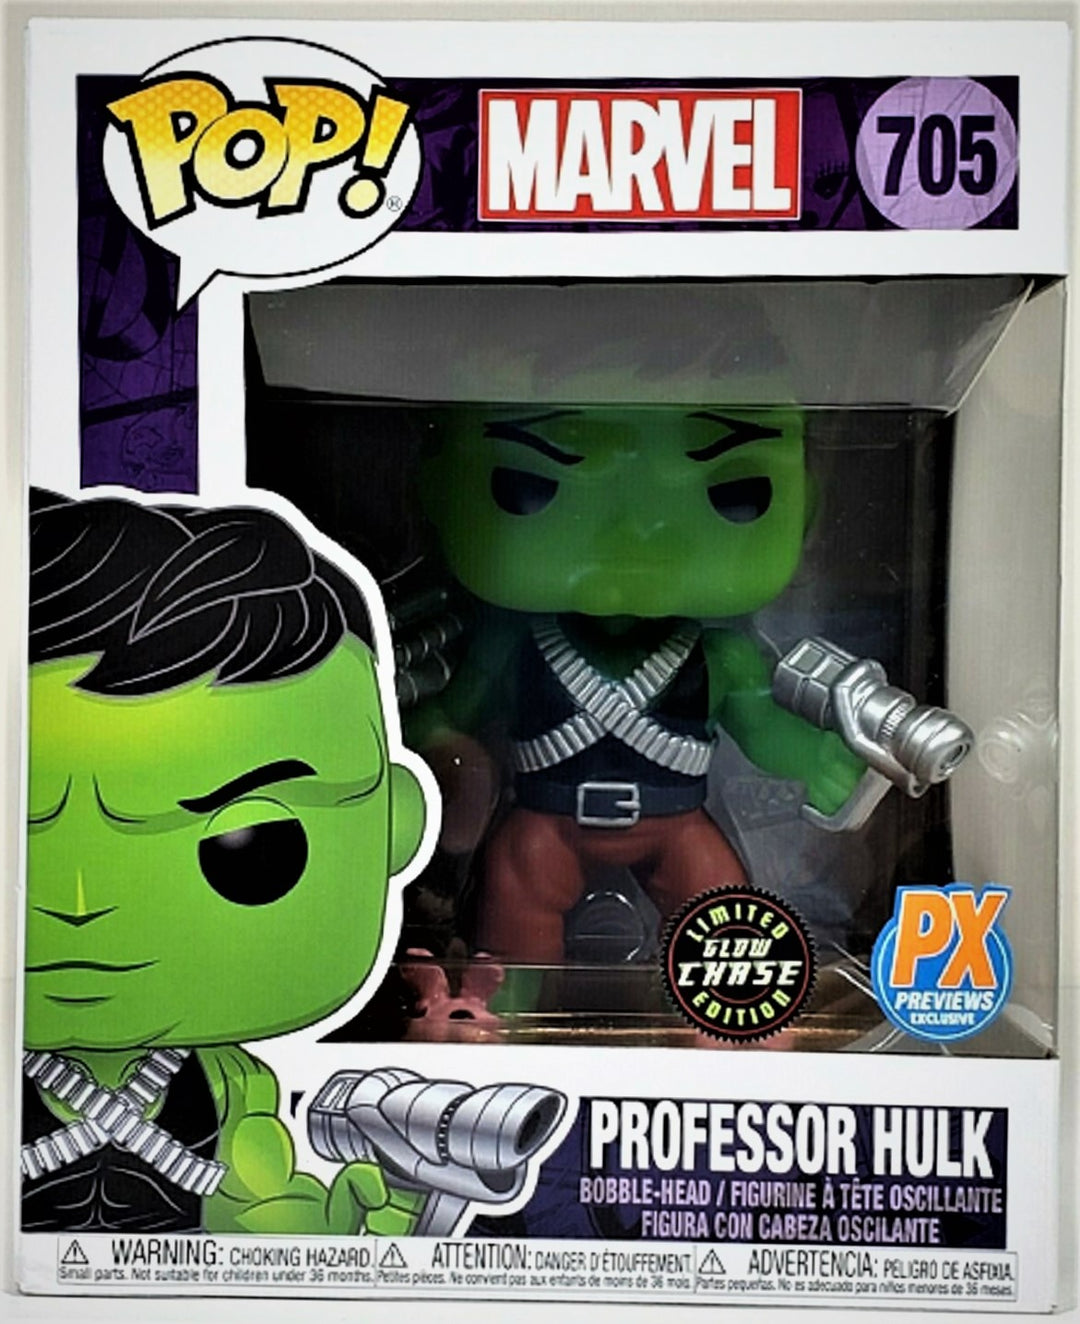 Funko Pop! Marvel Super Heroes Professor Hulk 6" Deluxe Chase Vinyl Figure